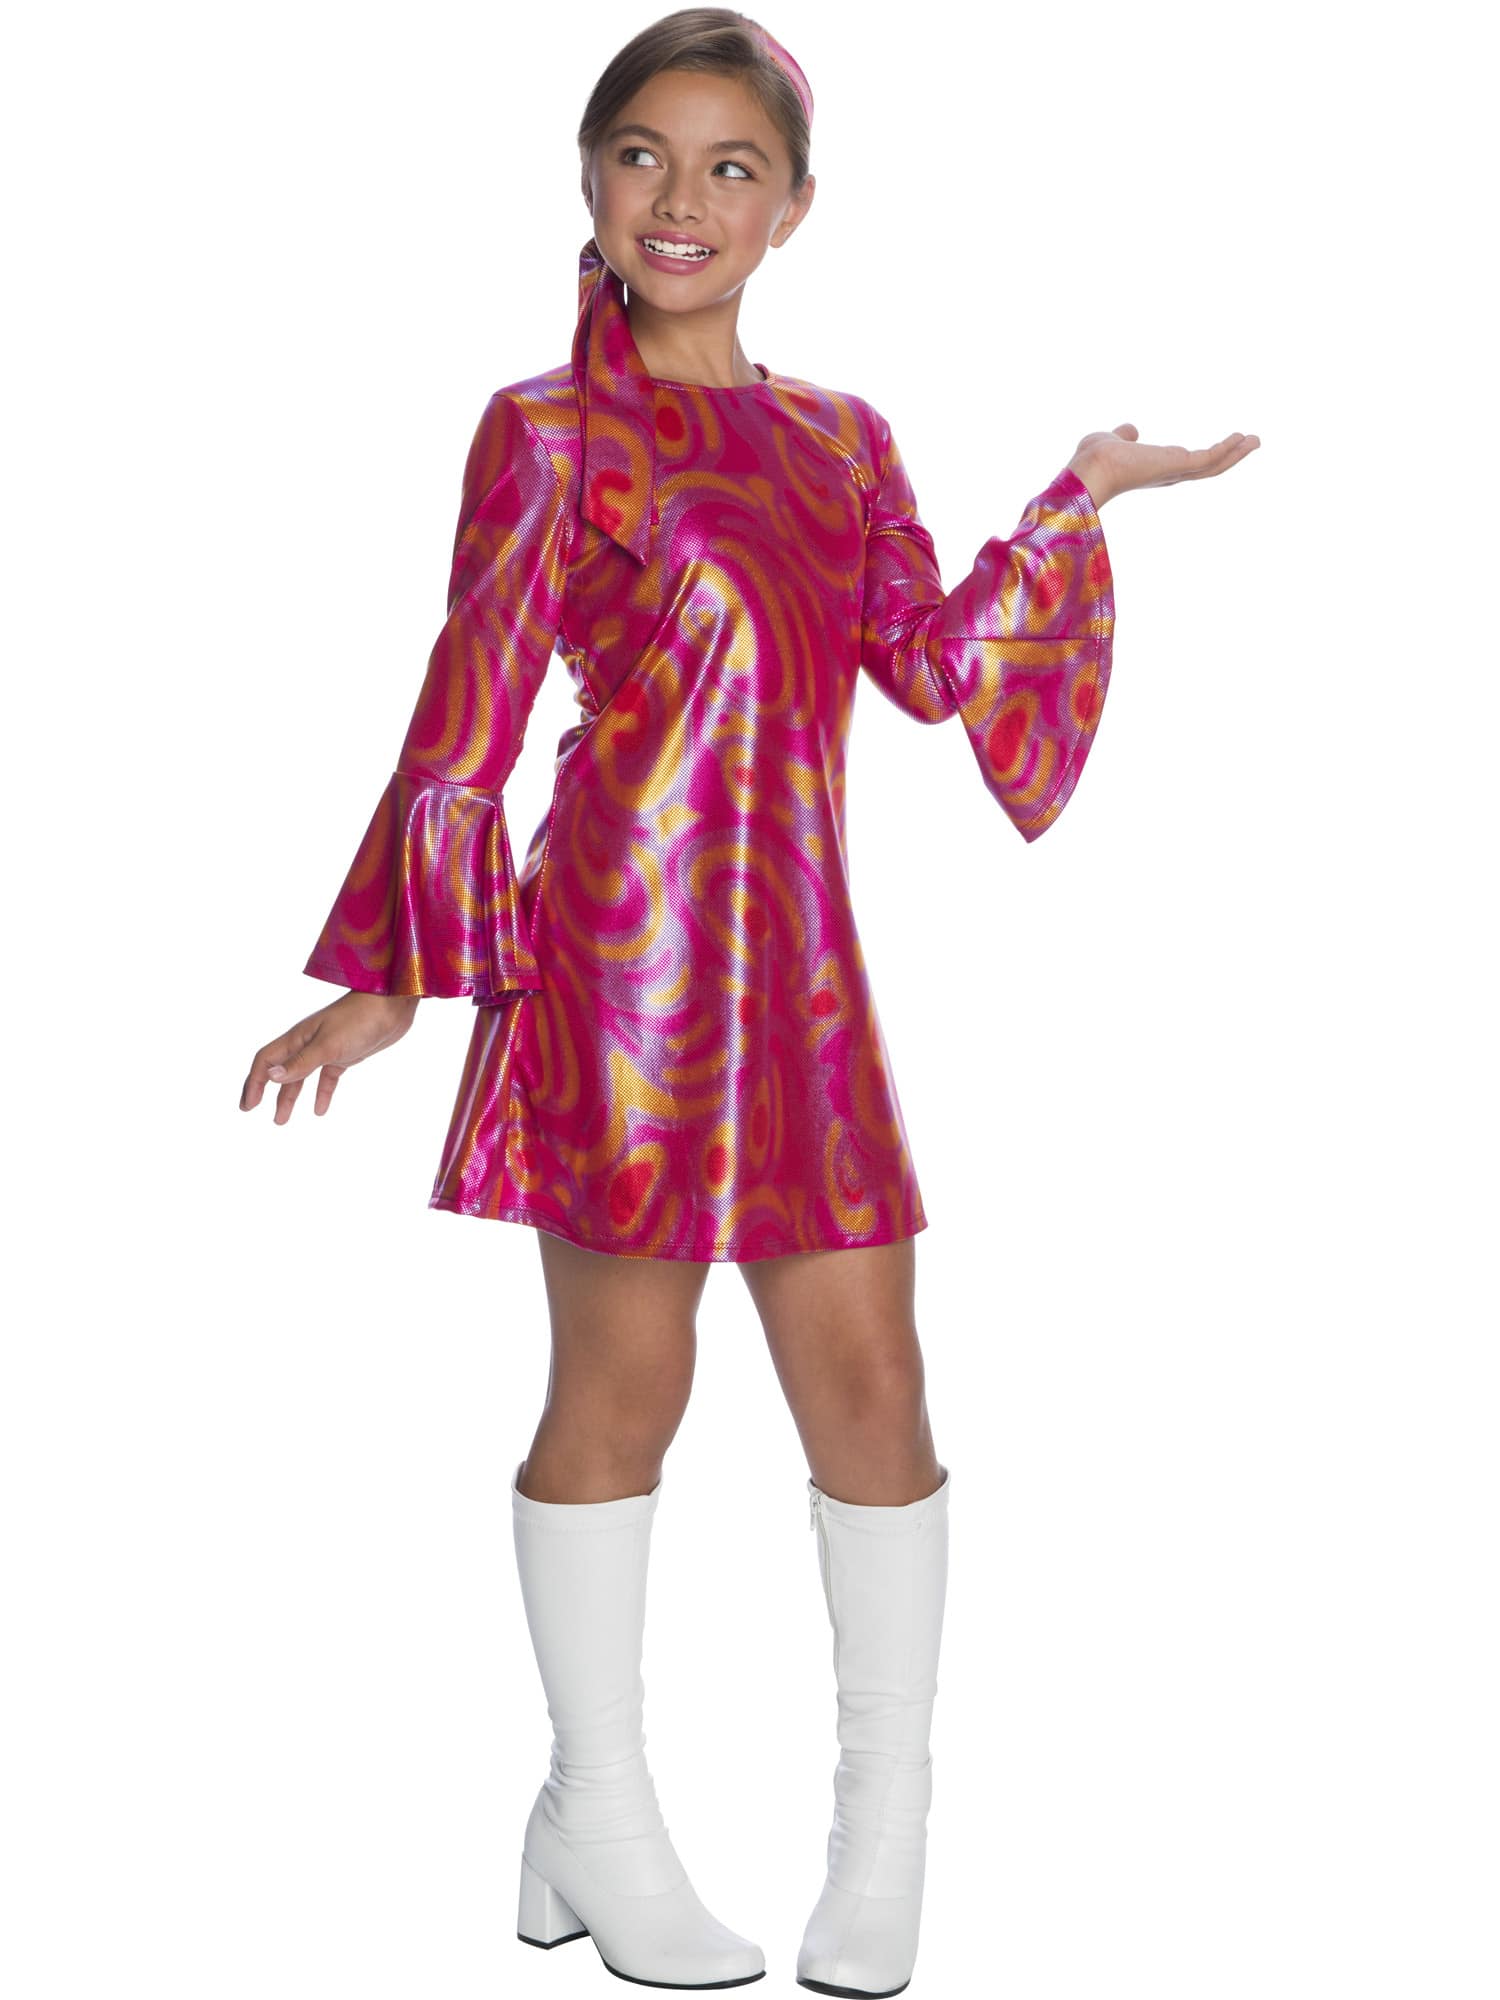 Kid's Fuchsia Swirl Disco Diva Costume - costumes.com